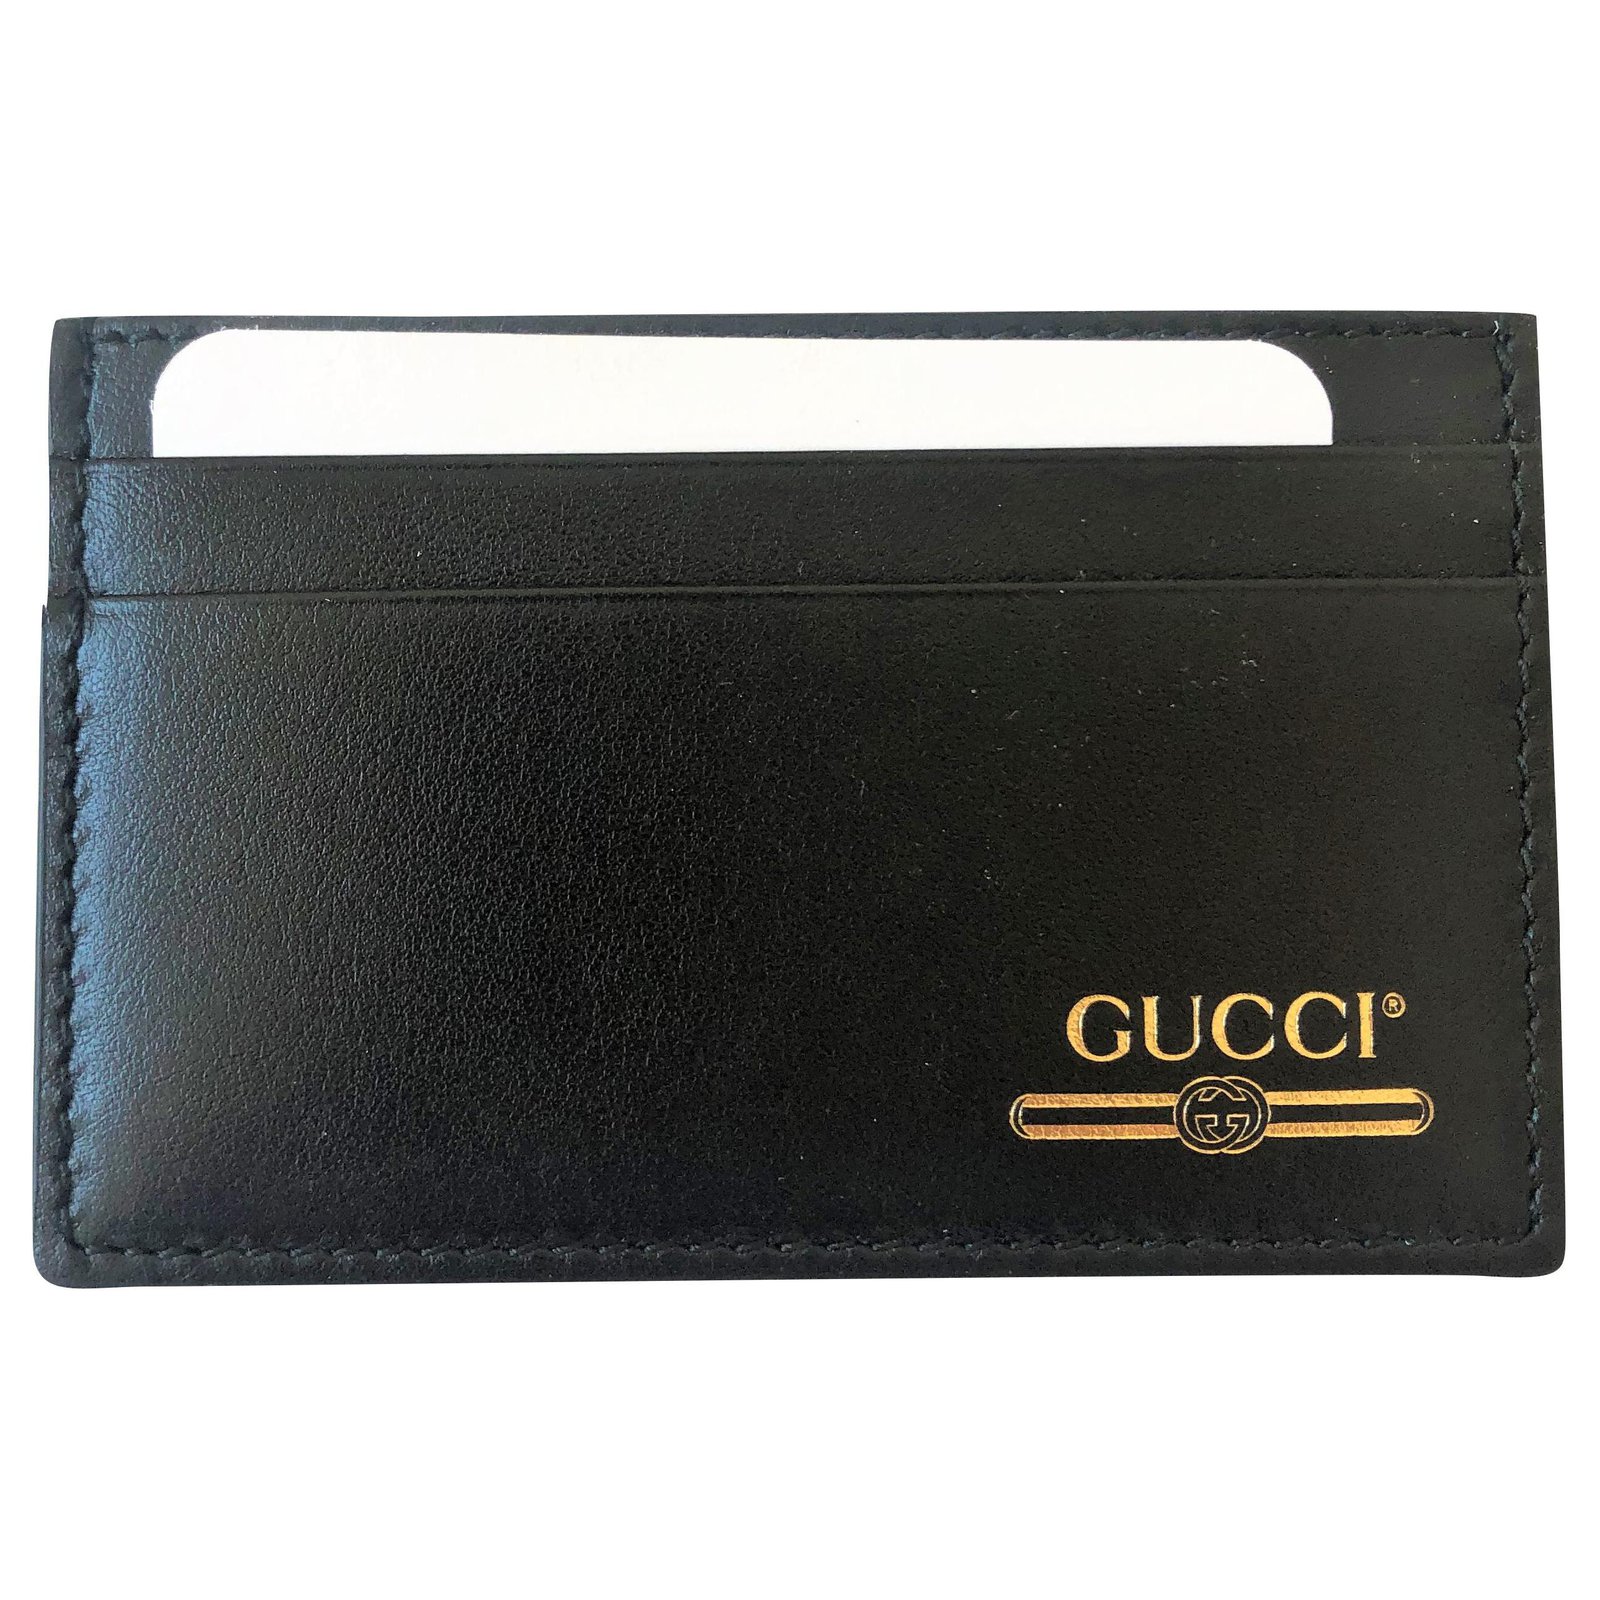 gucci small card holder